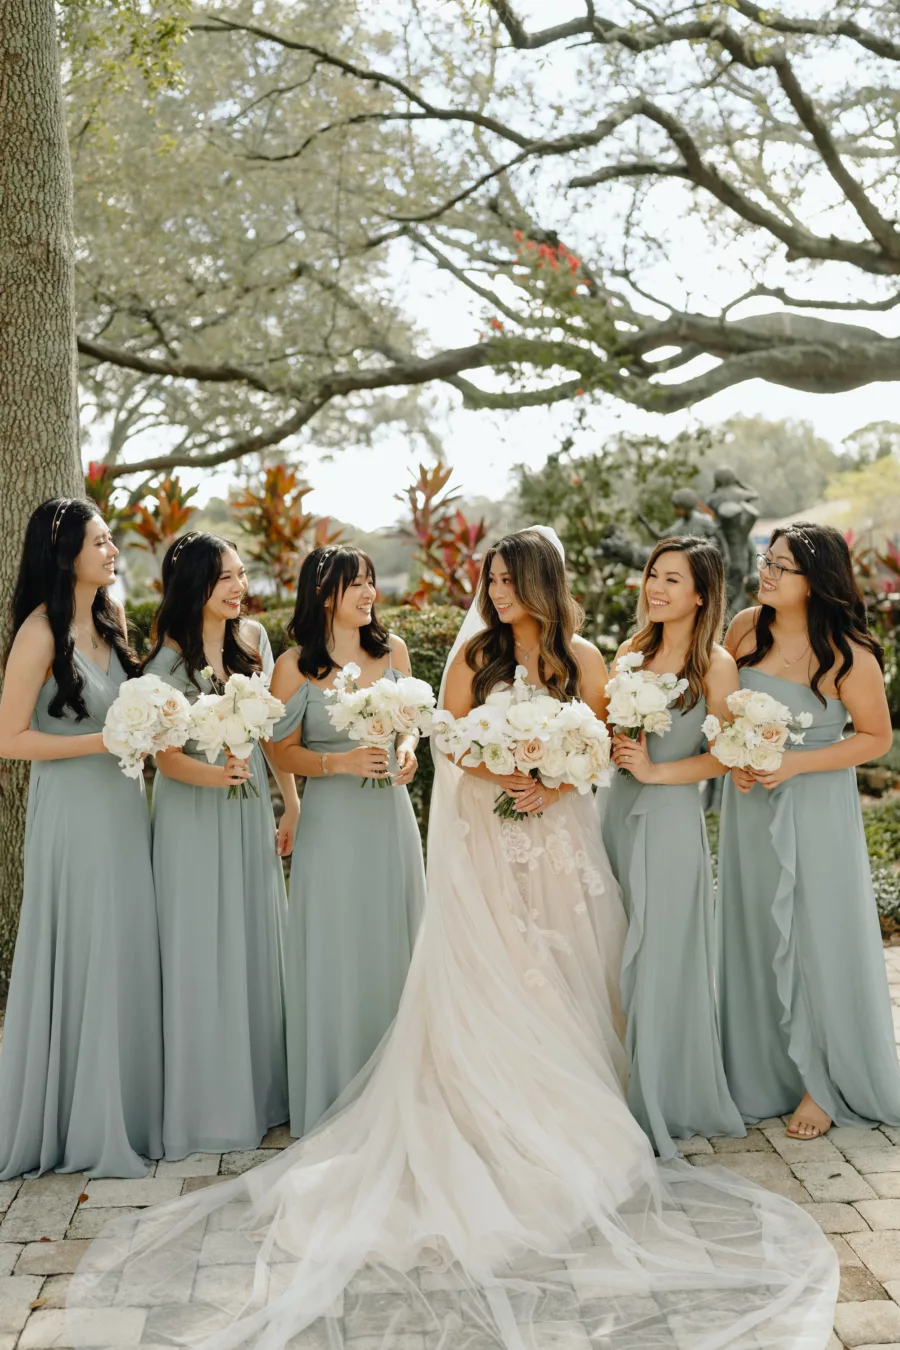 Sage Green Bridesmaid Dress Ideas | | Ivory Strapless Lace A-Line Wedding Dress Inspiration | Tampa Bay Florist Bloom Shakalaka | Lakeland Photographer and Videographer J&S Media